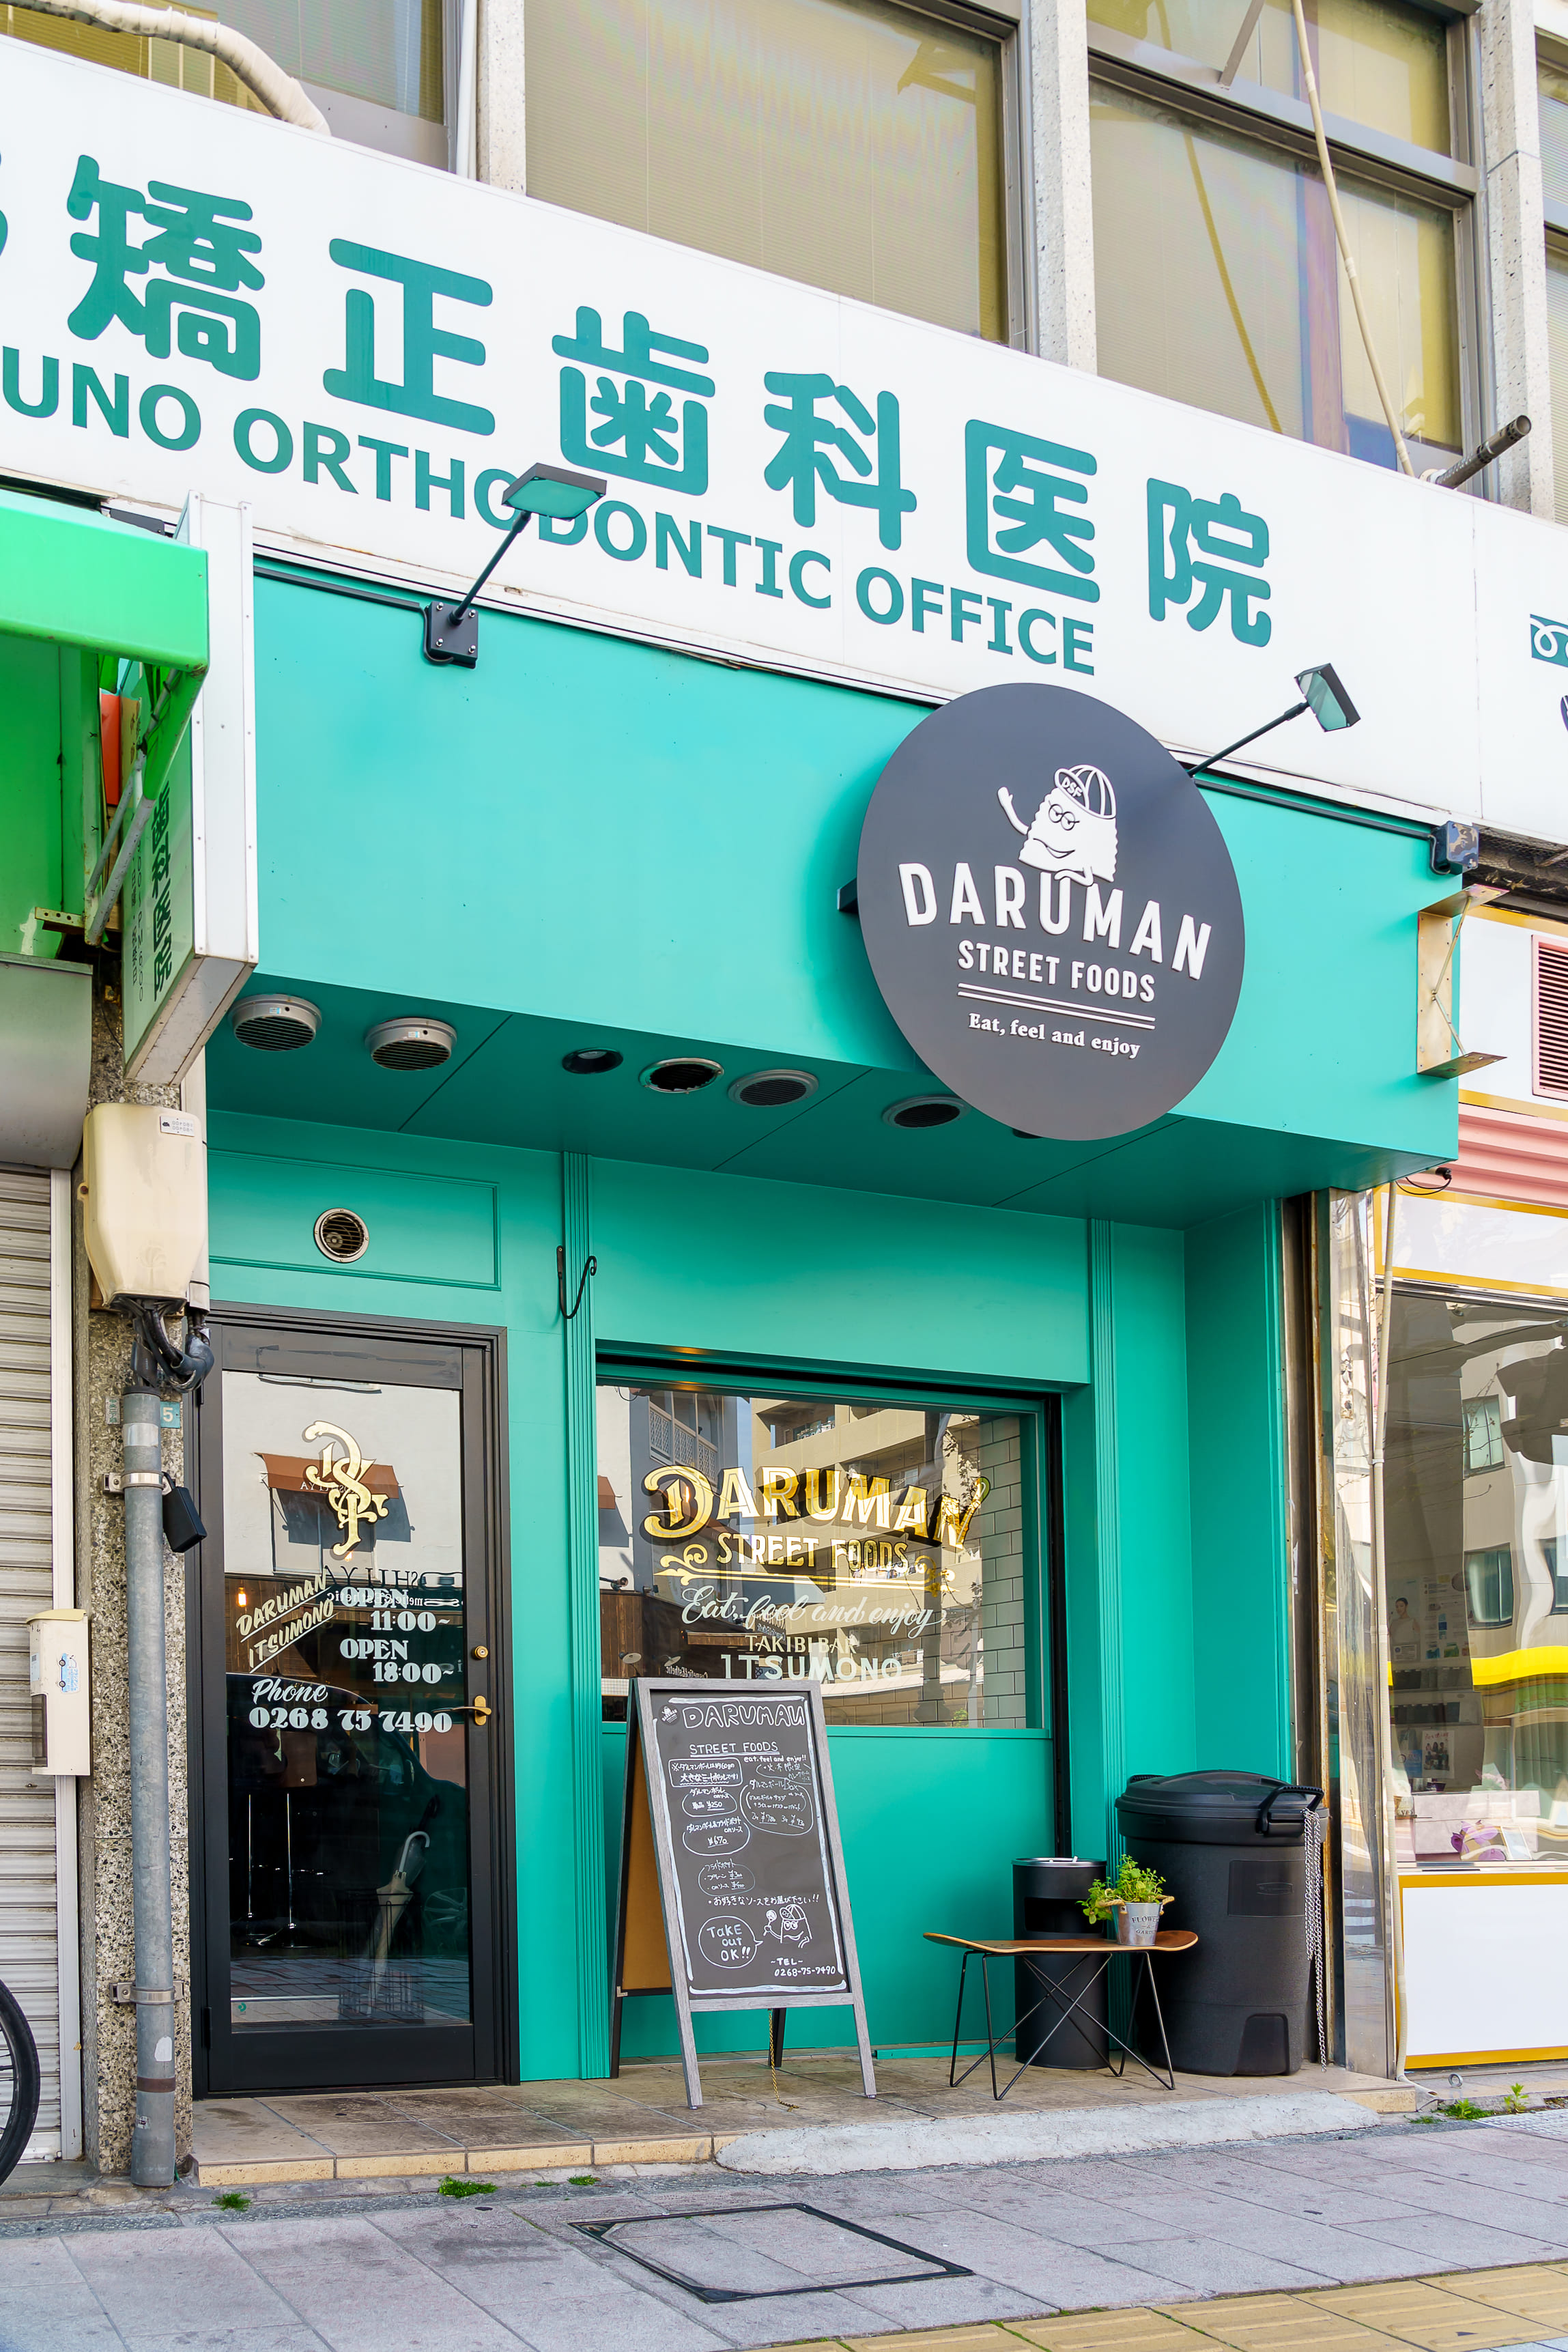 DARUMAN Street Foods / Takibi bar ITSUMONO